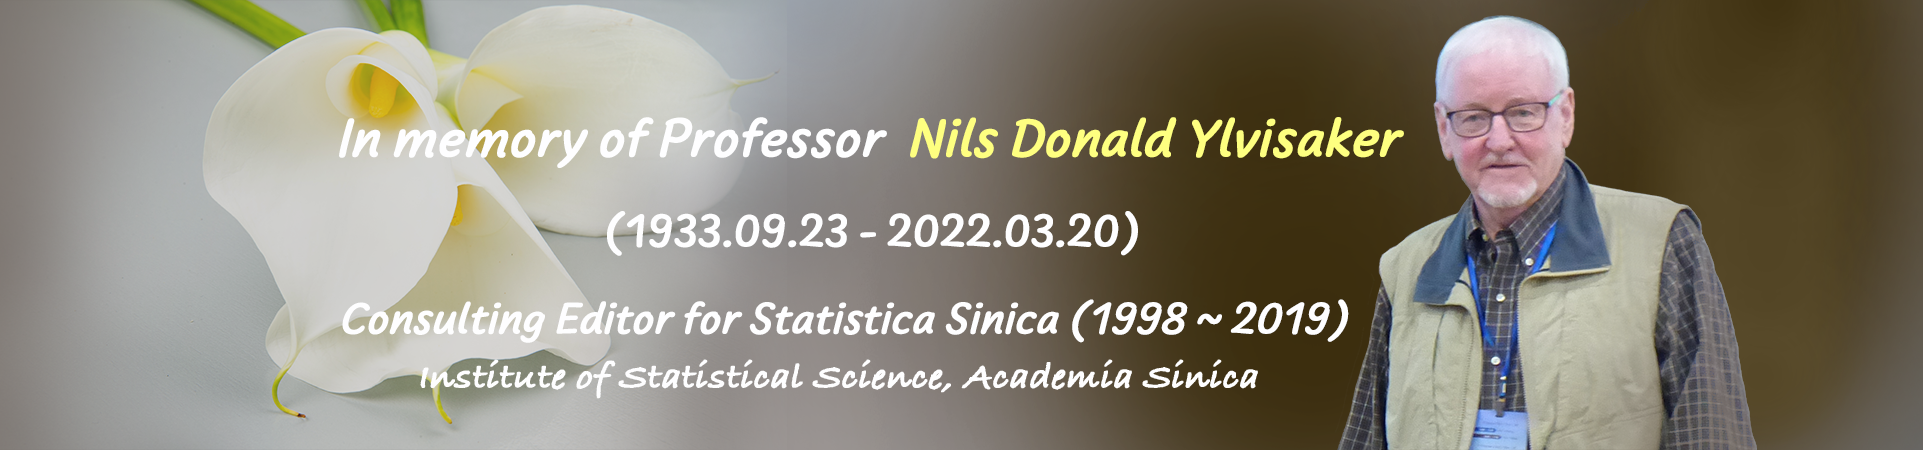 In Memory of Professor Nils Donald Ylvisaker